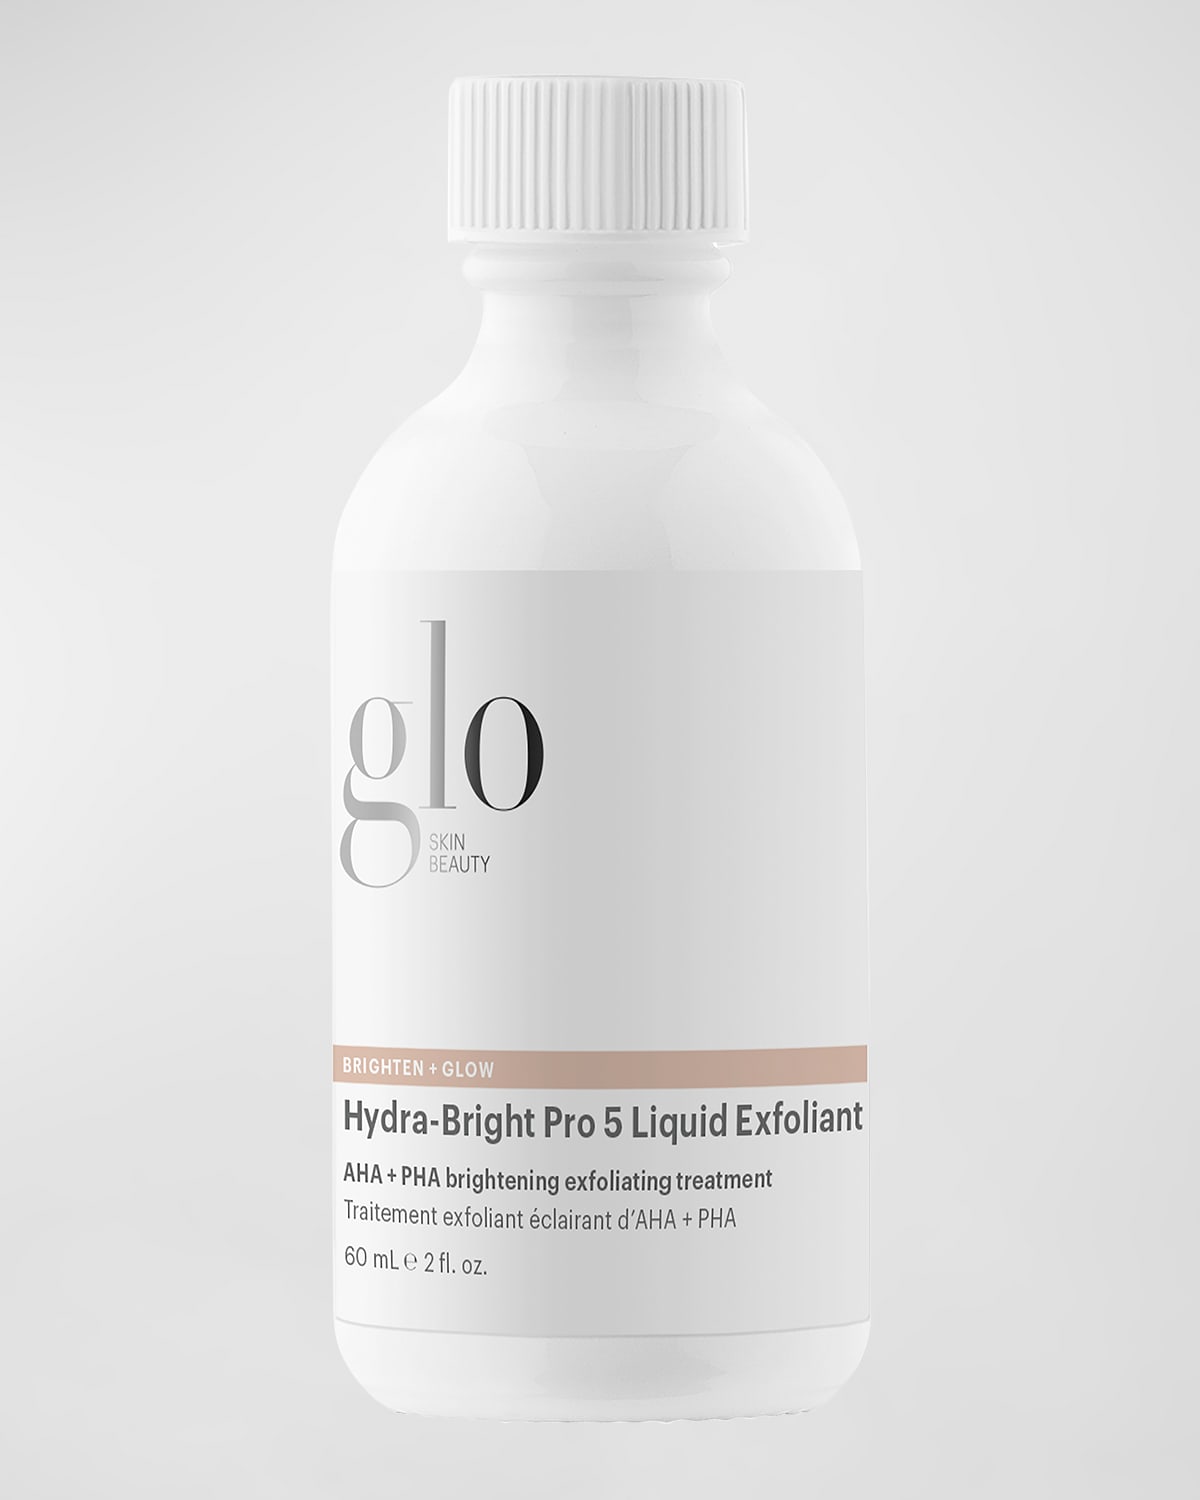 Glo Skin Beauty 2 oz. Hydra-Bright Pro 5 Liquid Exfoliant